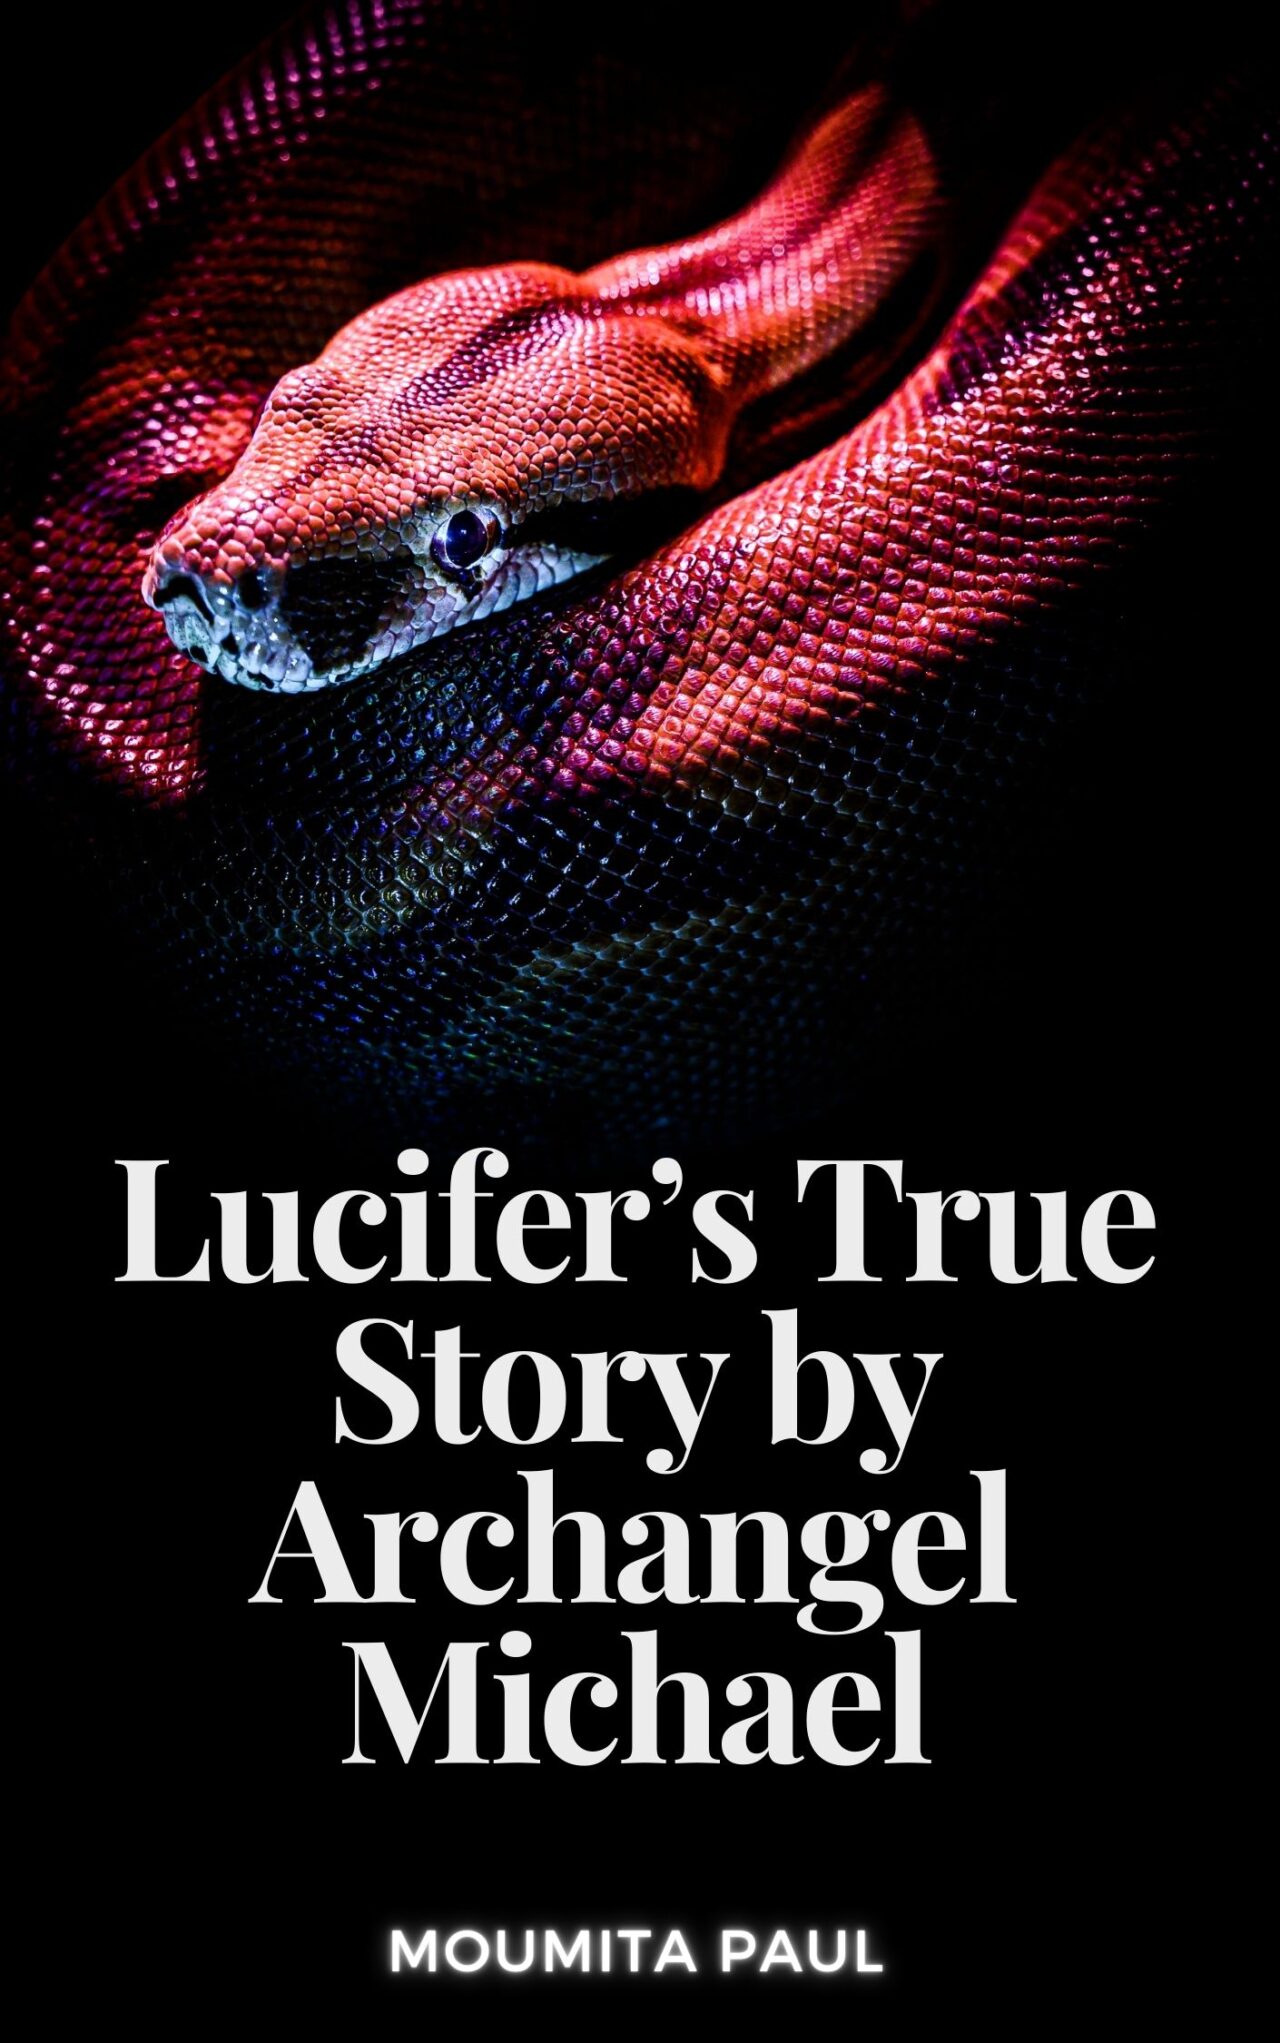 Lucifer's true story